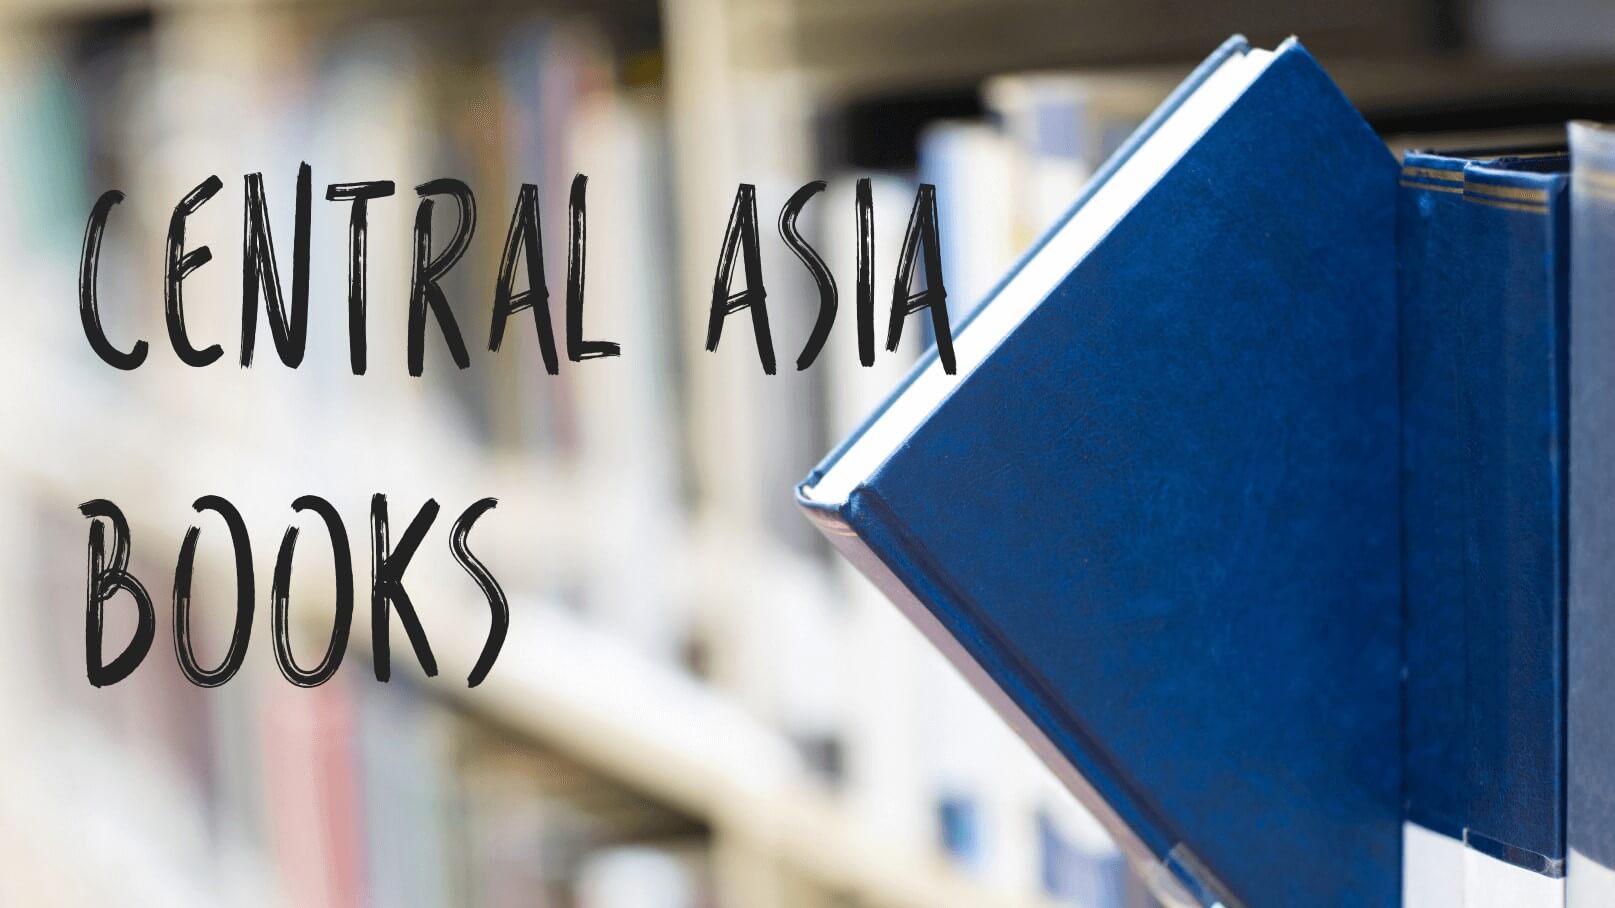 Central Asia Books blog